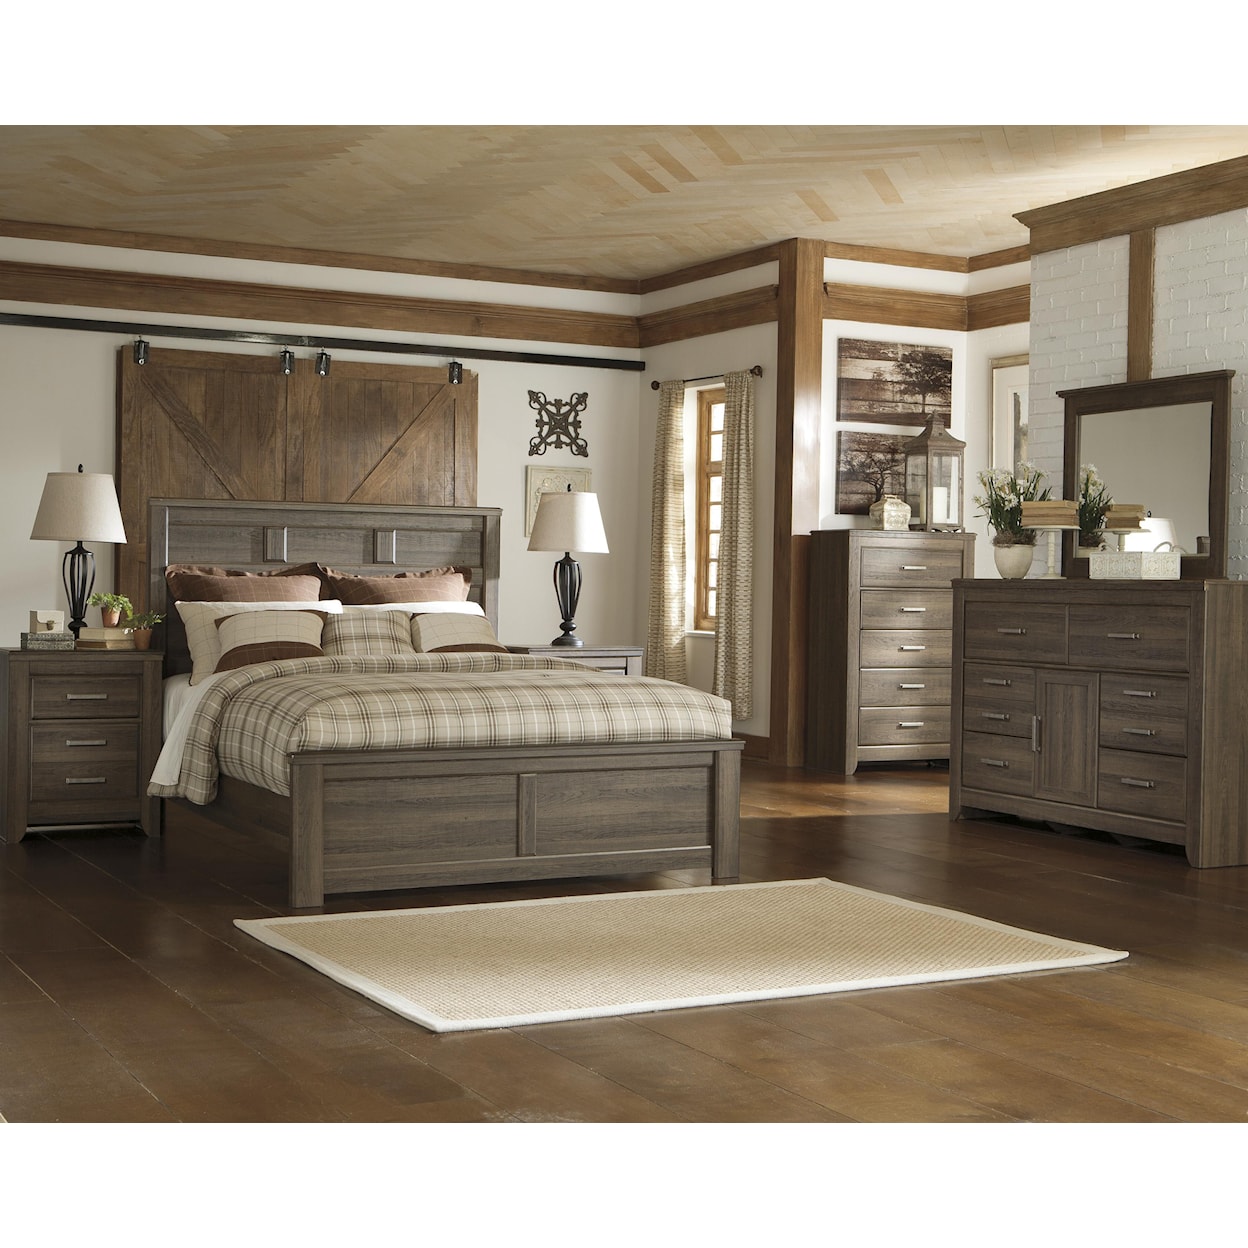 Signature Design by Ashley Furniture Juararo King Bedroom Group